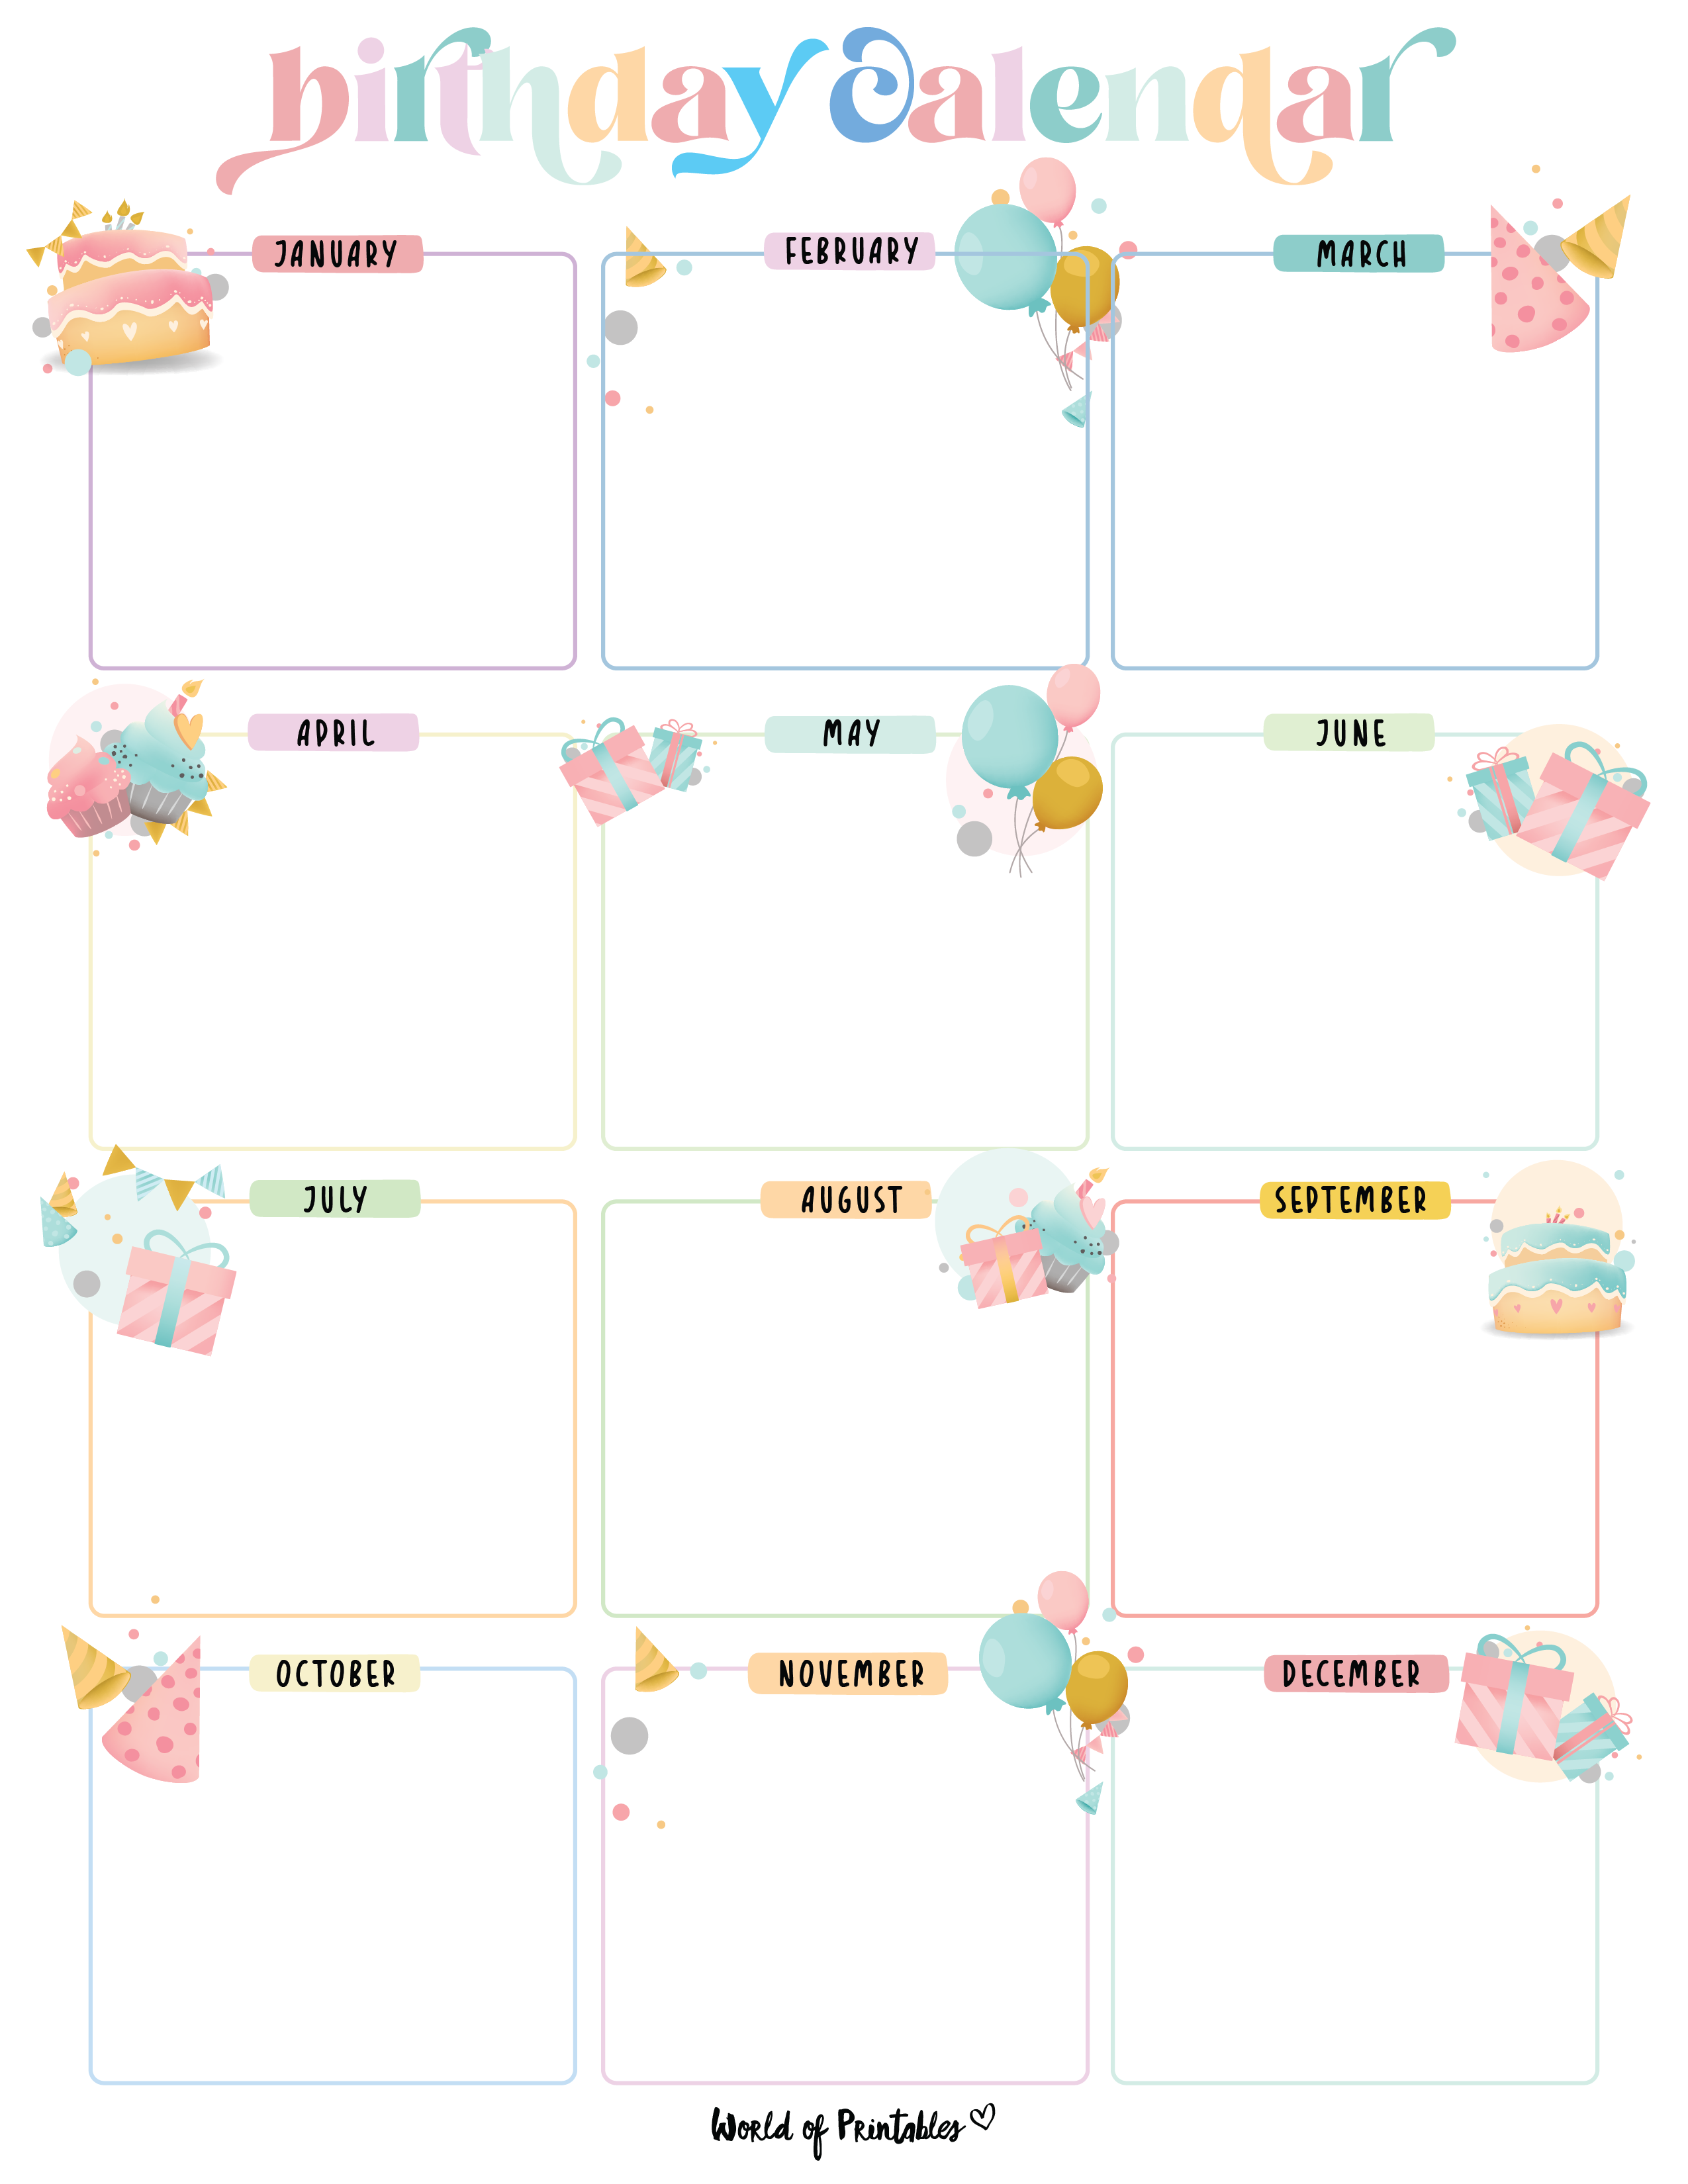 free calendar template for birthdays 27